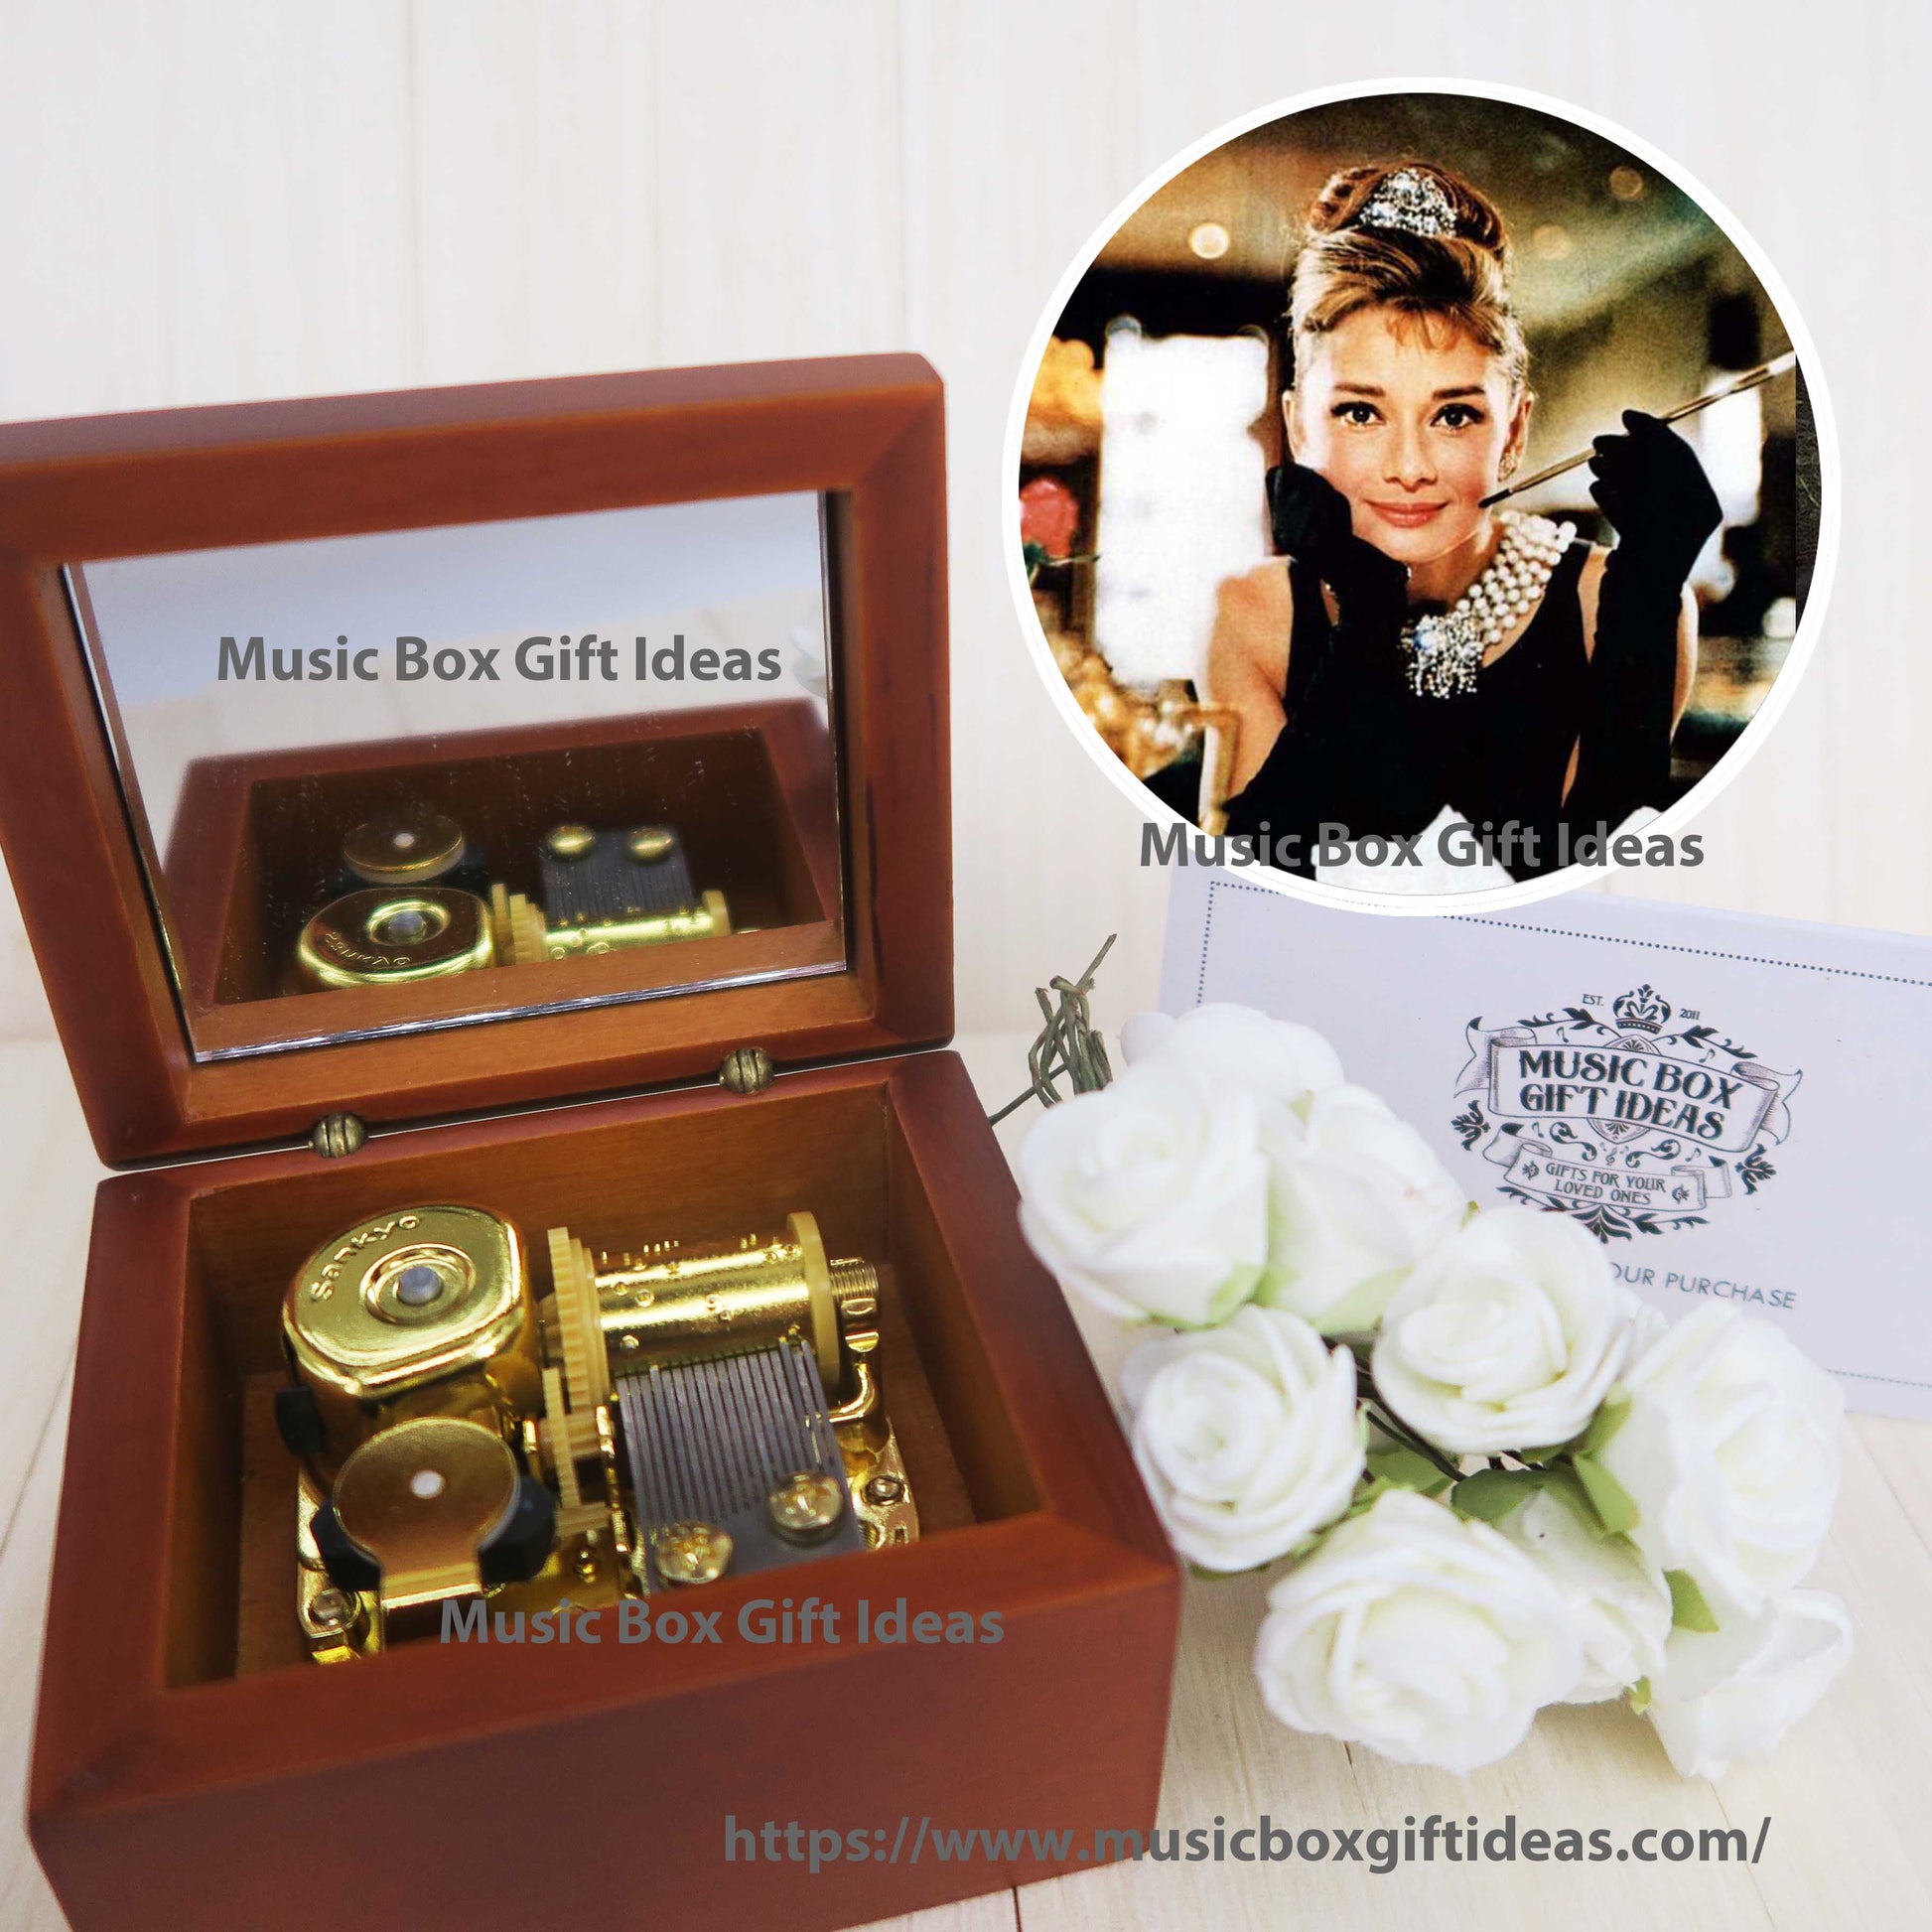 Breakfast at Tiffany's Soundtrack Moon River Audrey Hepburn 18-Note Music Box Gift  (Wooden Clockwork) - Music Box Gift Ideas